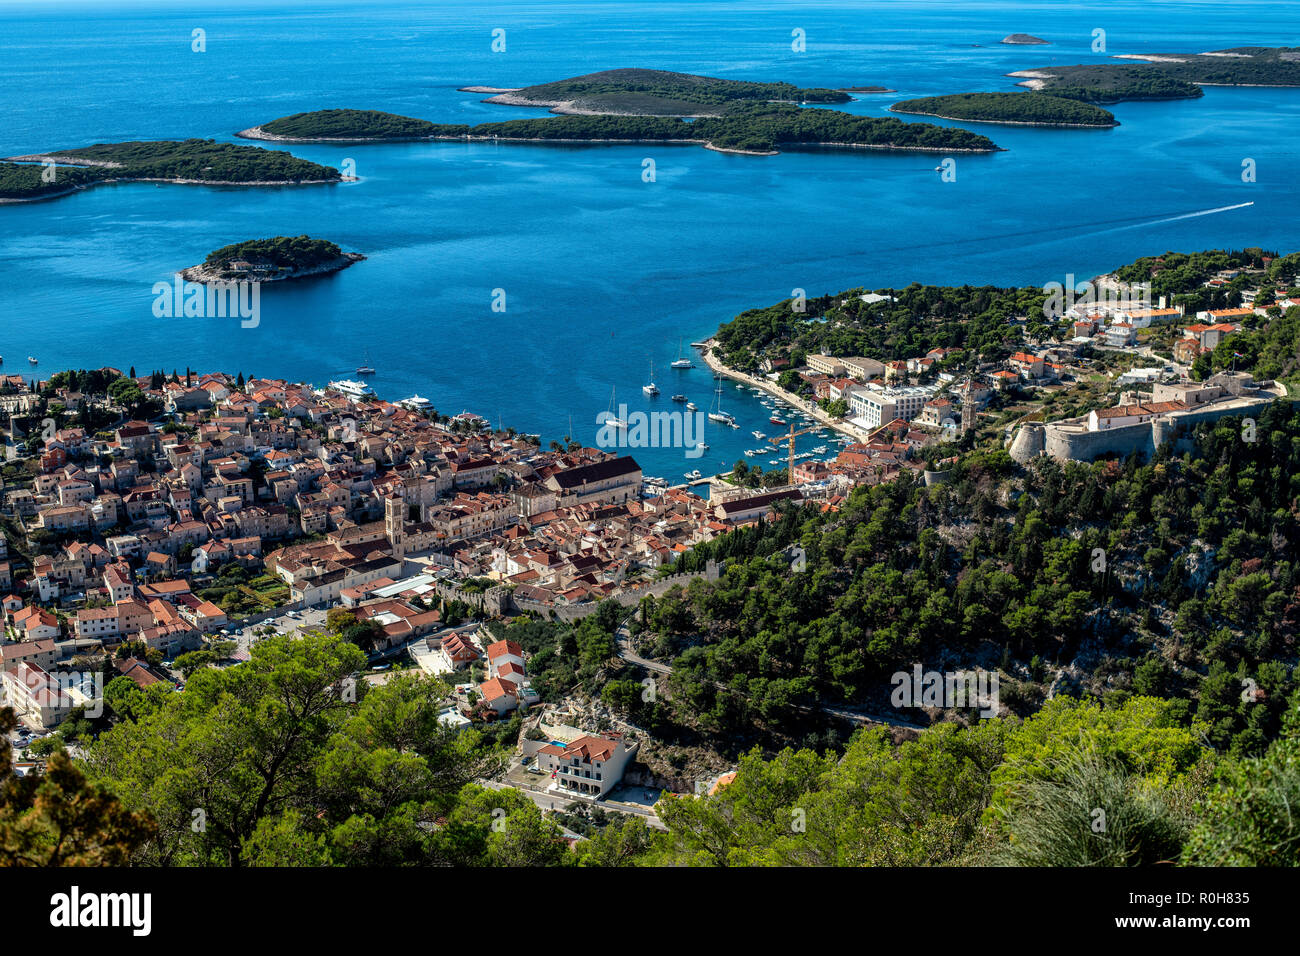 The port town of Hvar, on the island of Hvar island in the Adriatic Sea, Croatia. Stock Photo